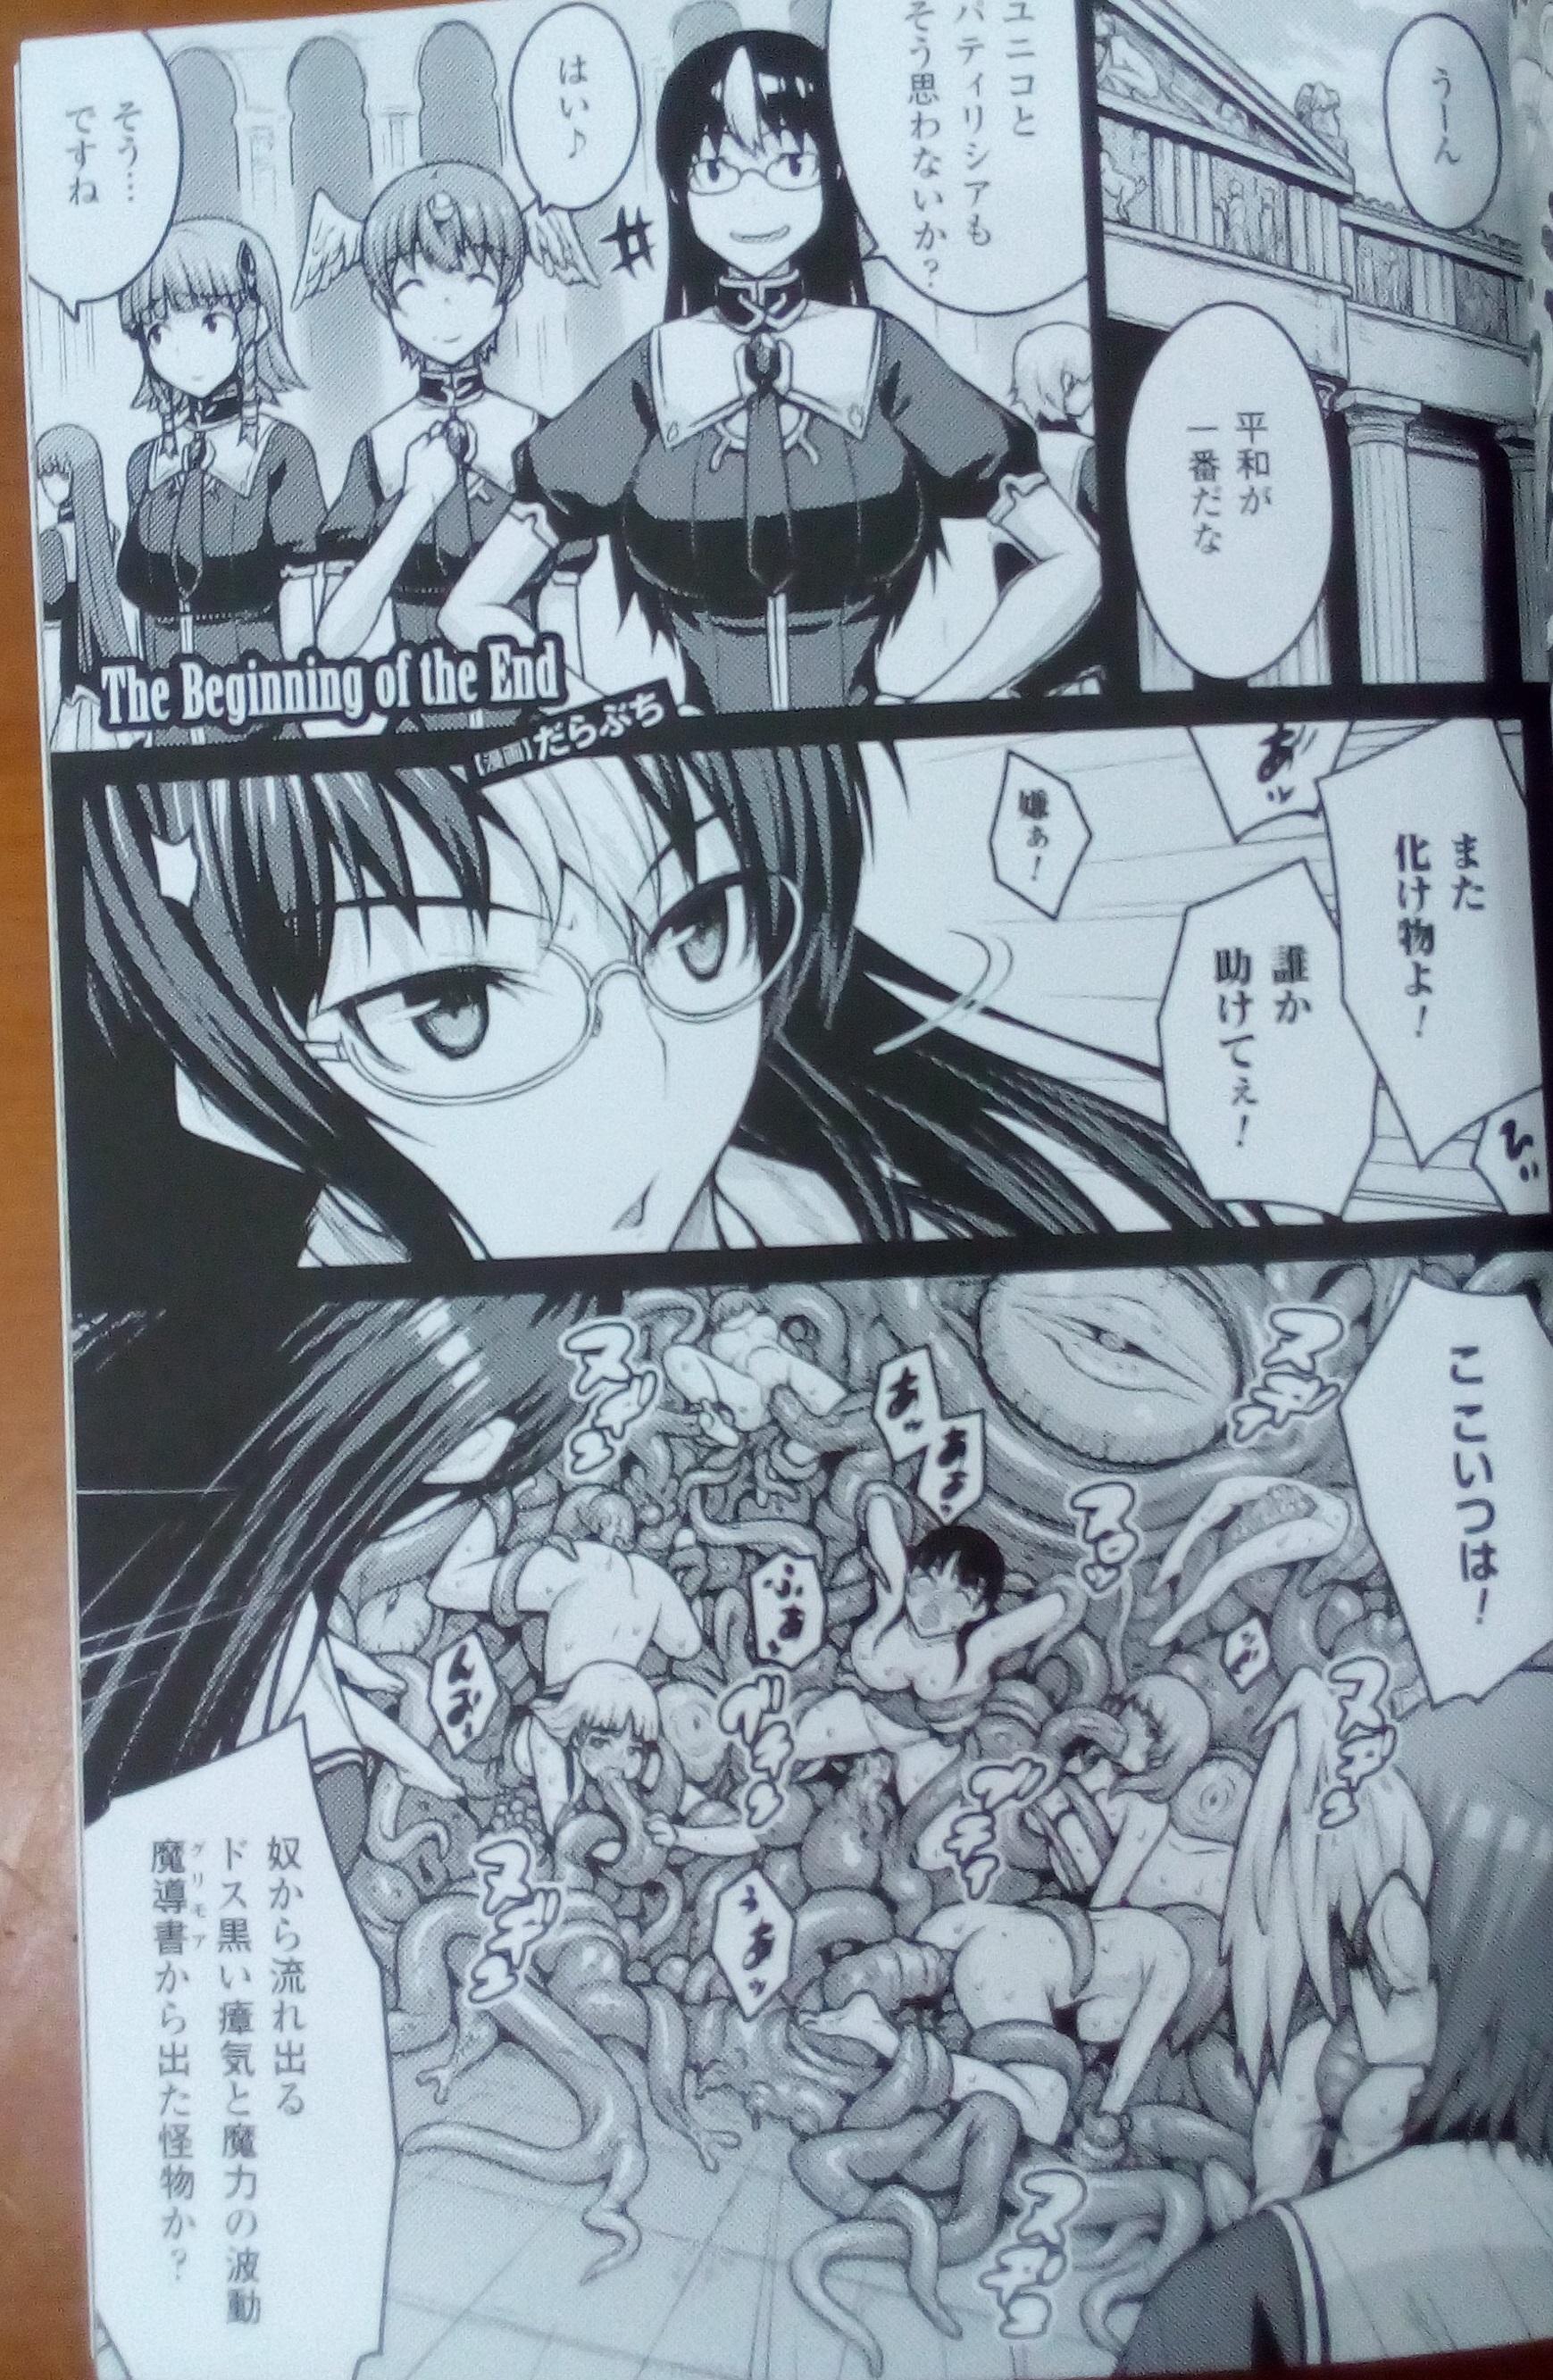 [Erect Sawaru] Shinkyoku no Grimoire III -PANDRA saga 2nd story-  Append book [Photoed] 19